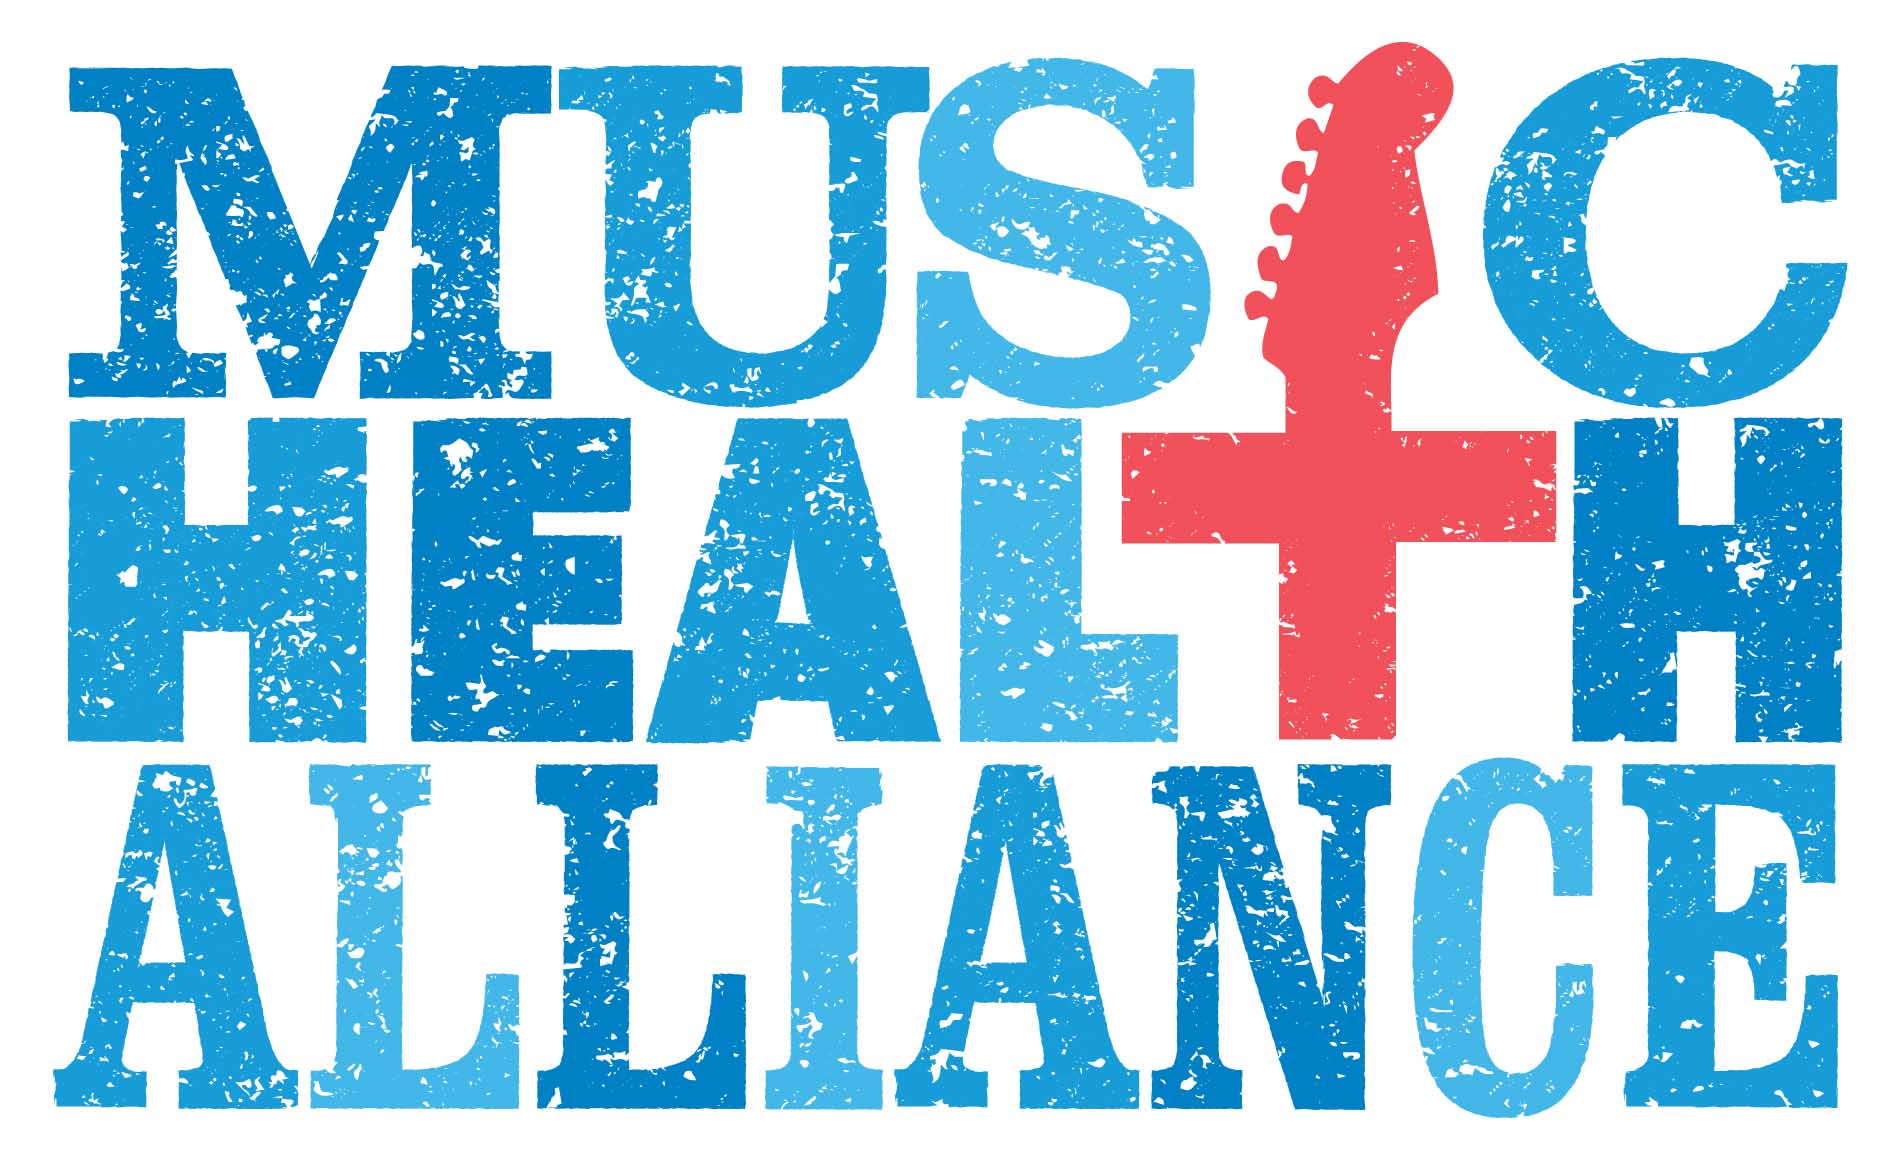 Music Health Alliance